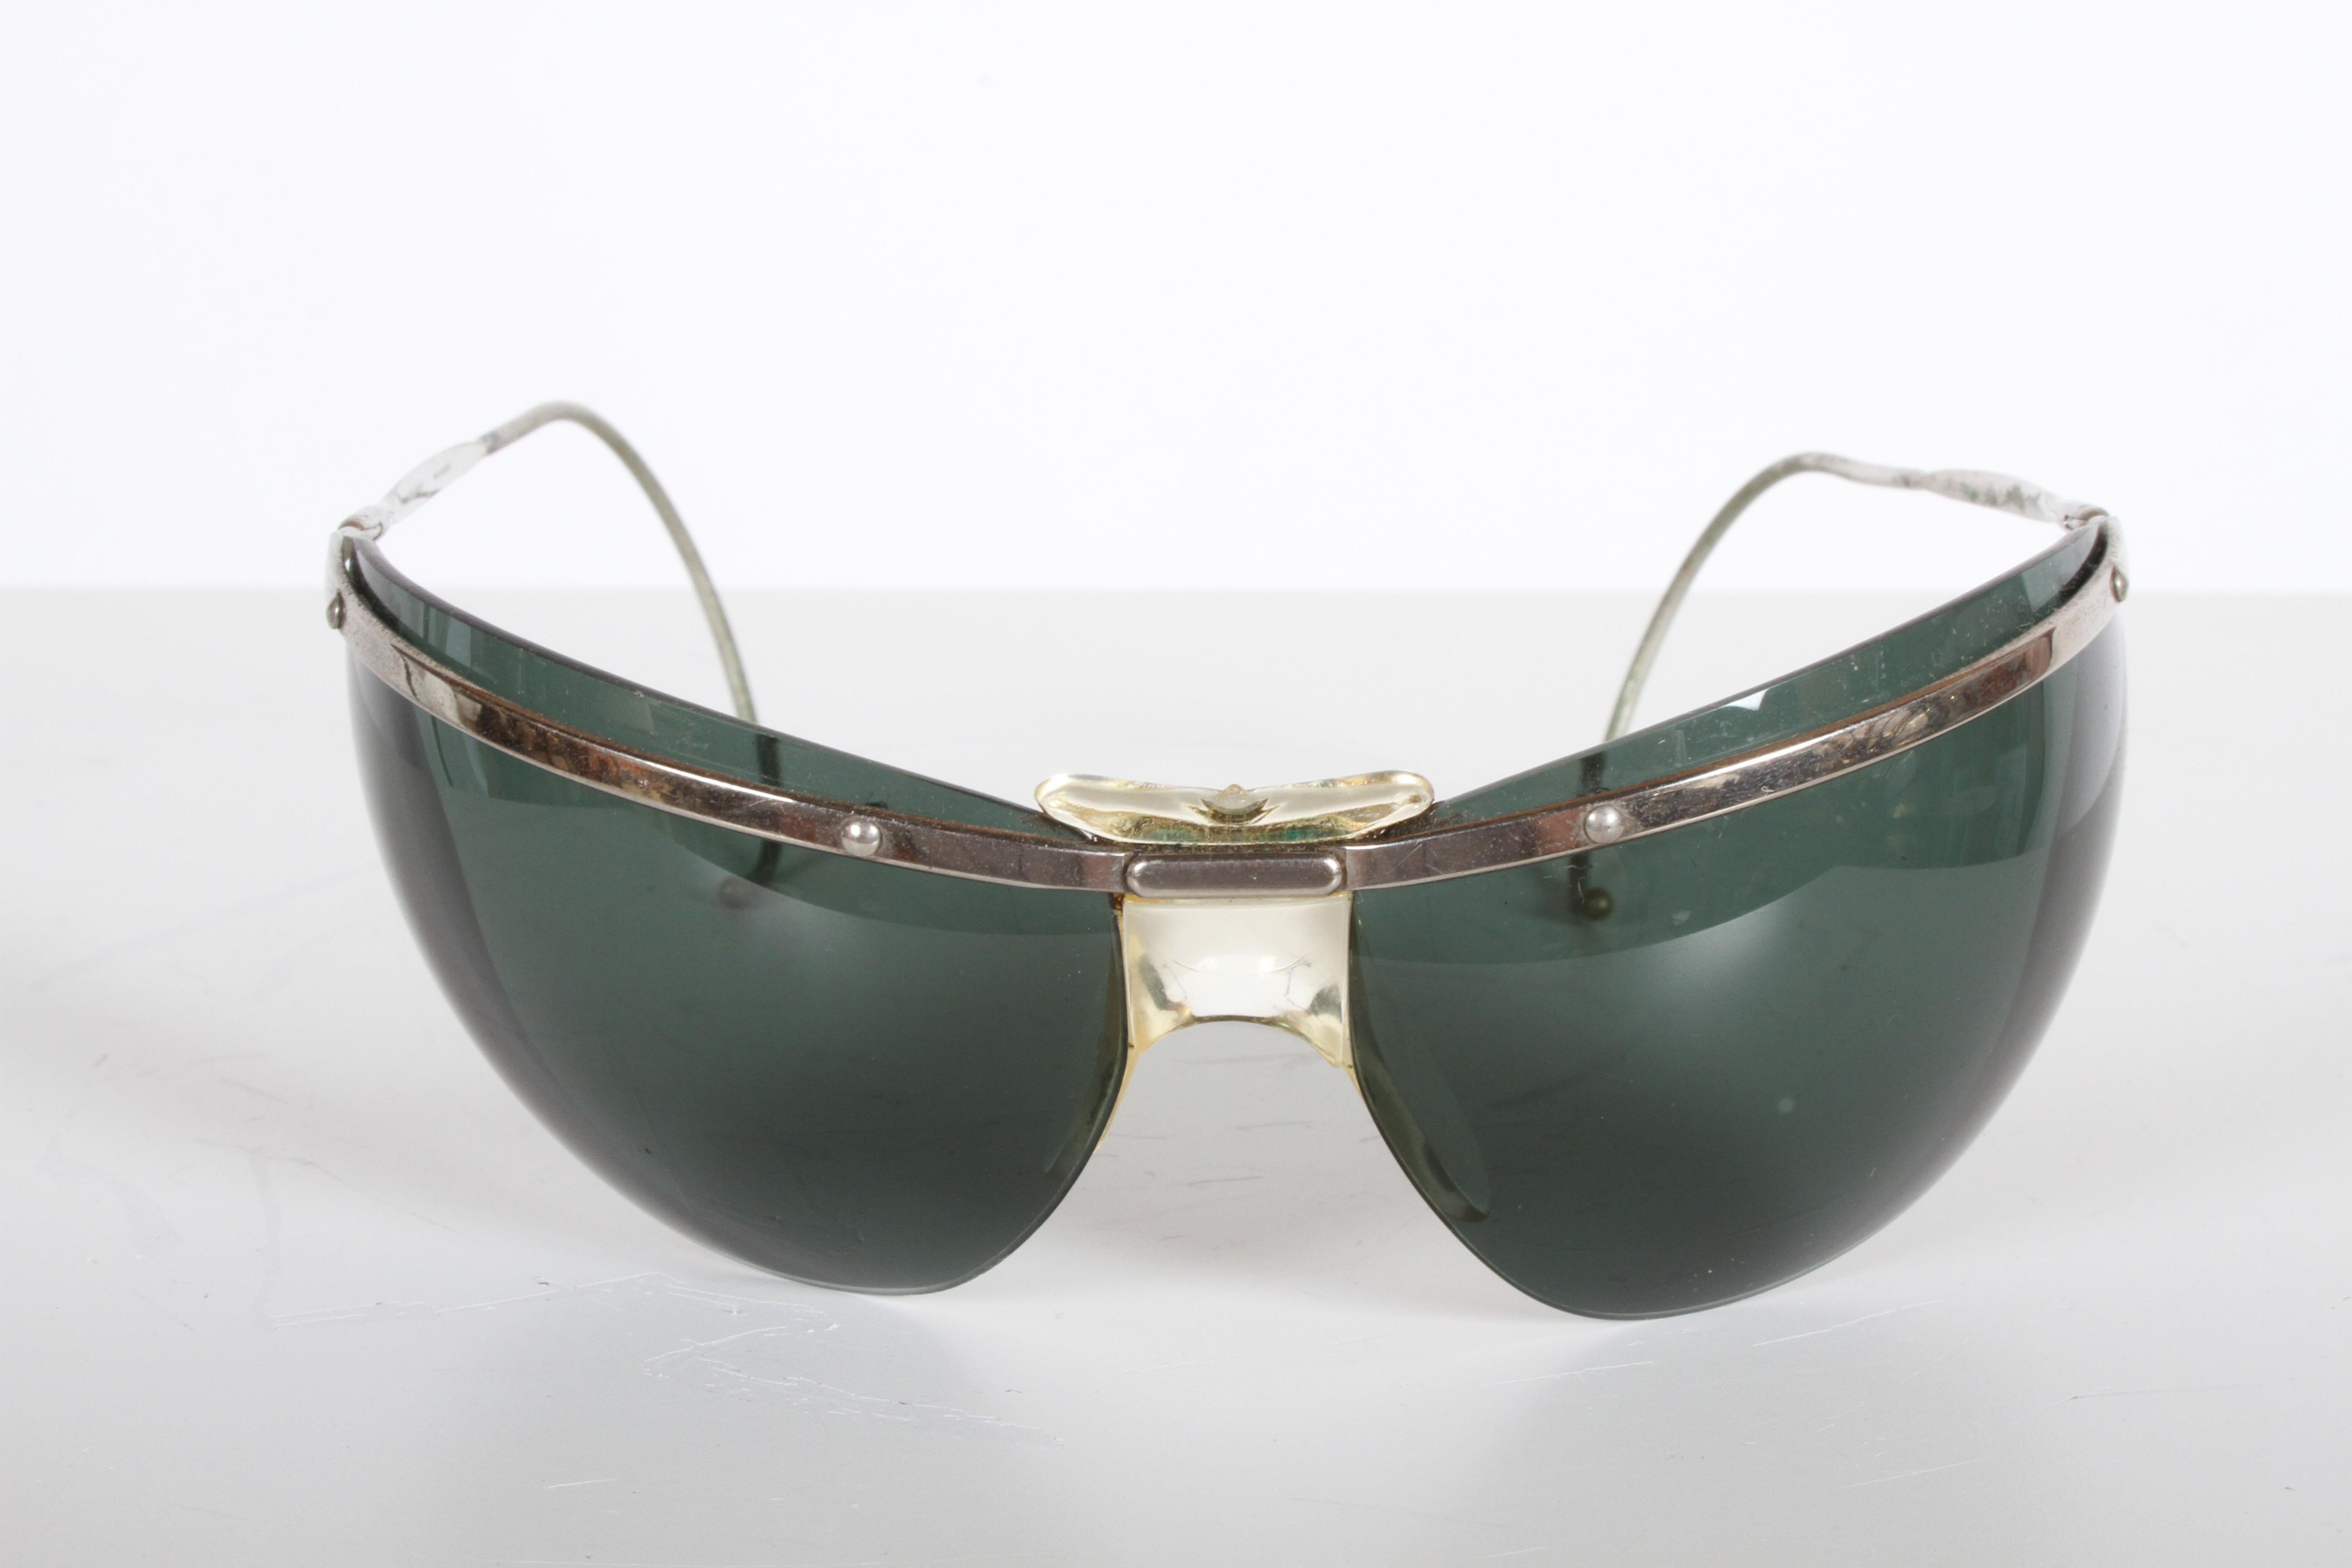 1960s wrap around sunglasses